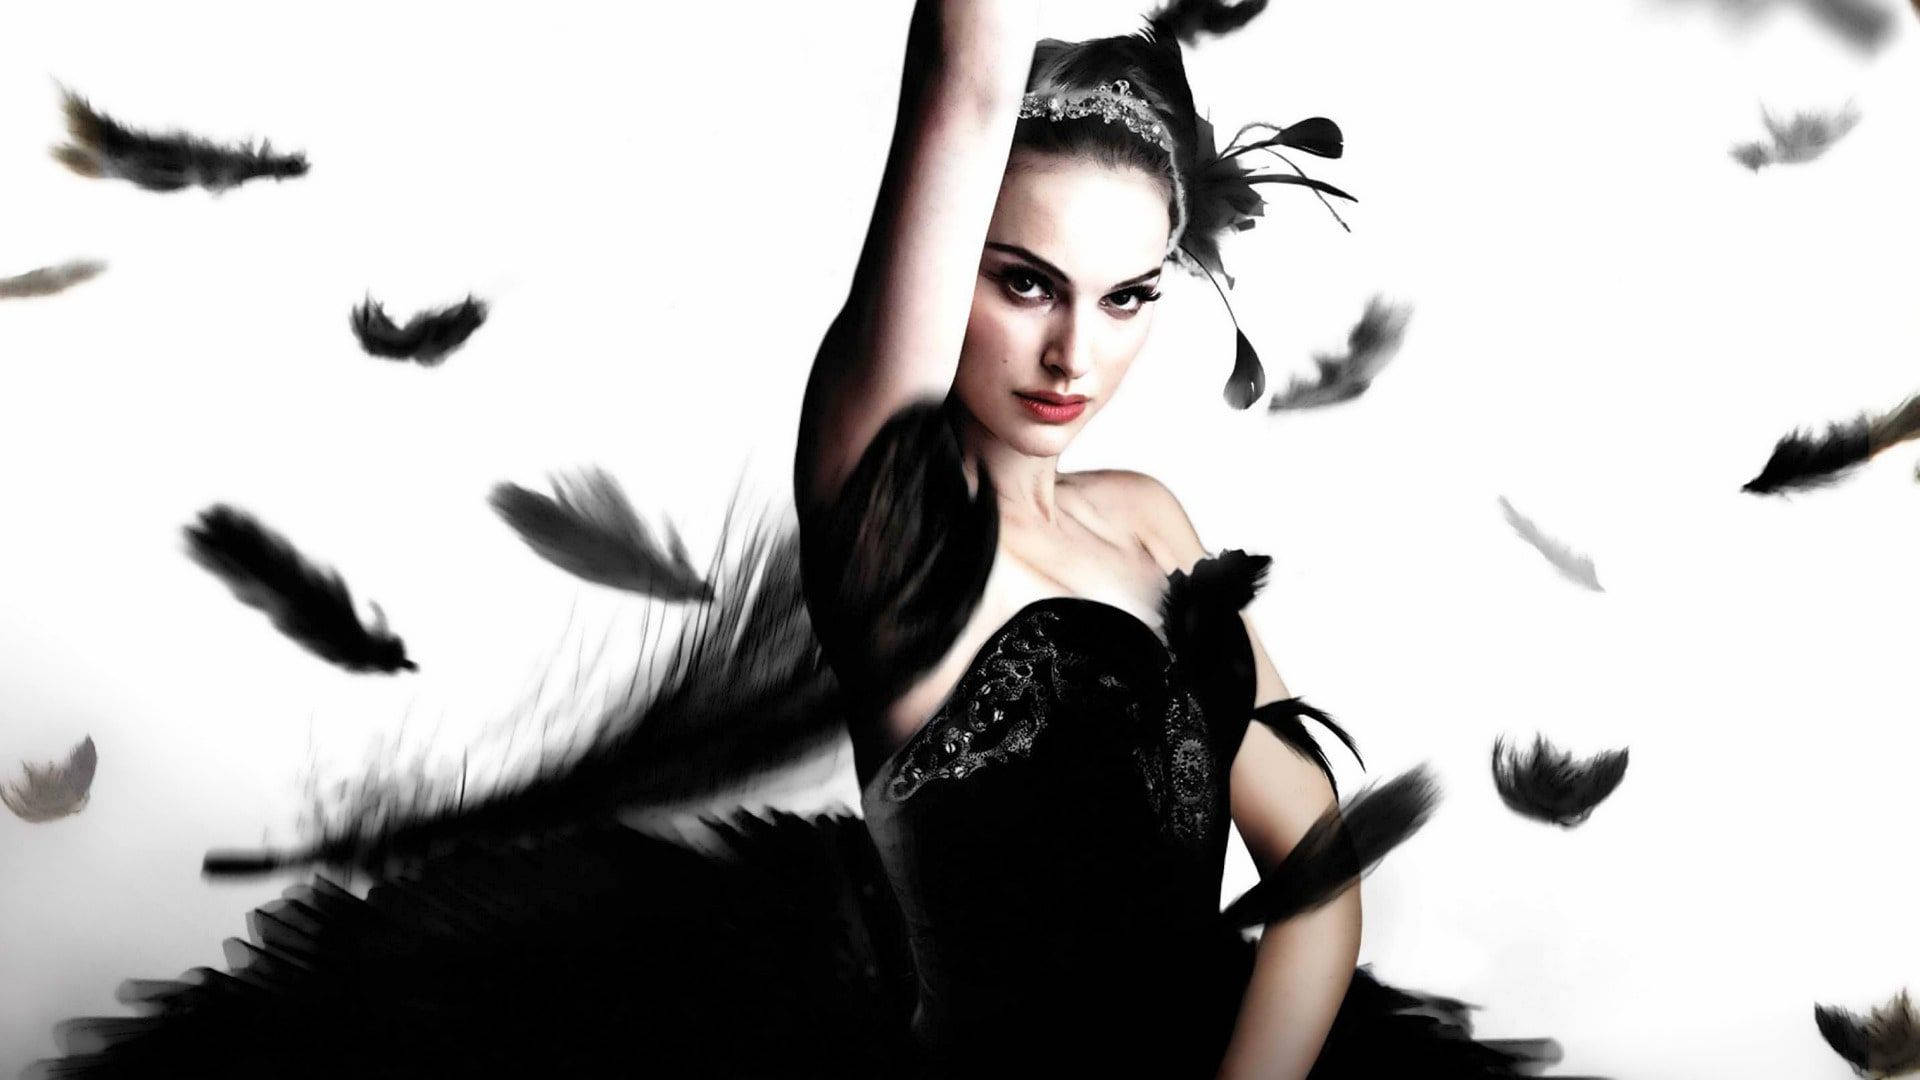 Natalie Portman In Black Dress Picture